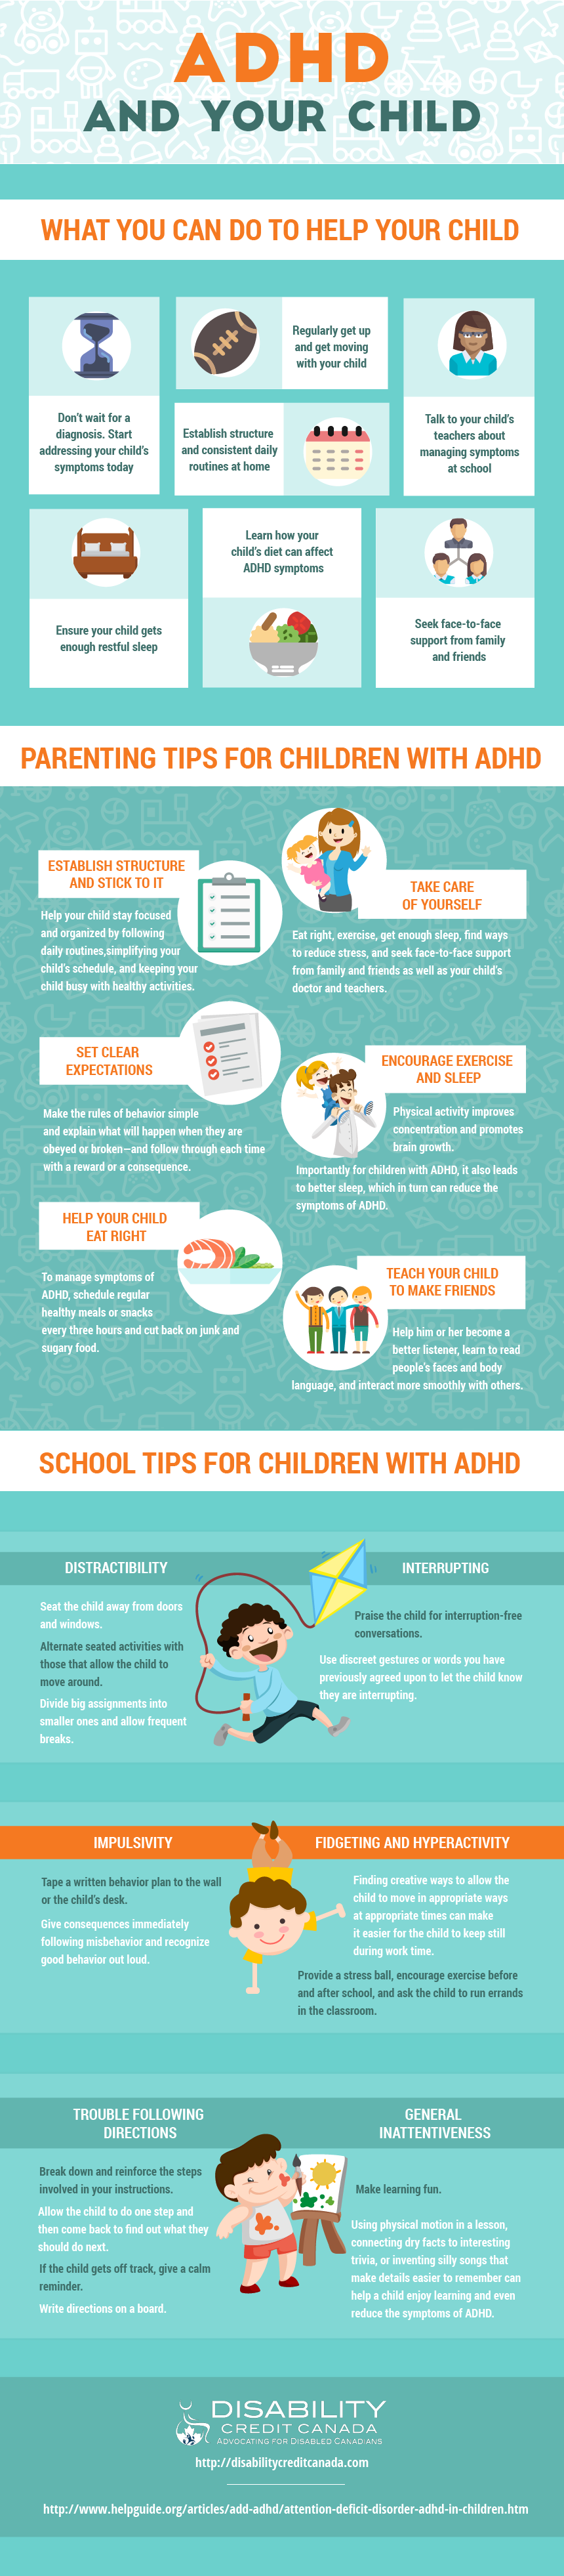 ADHD in Children